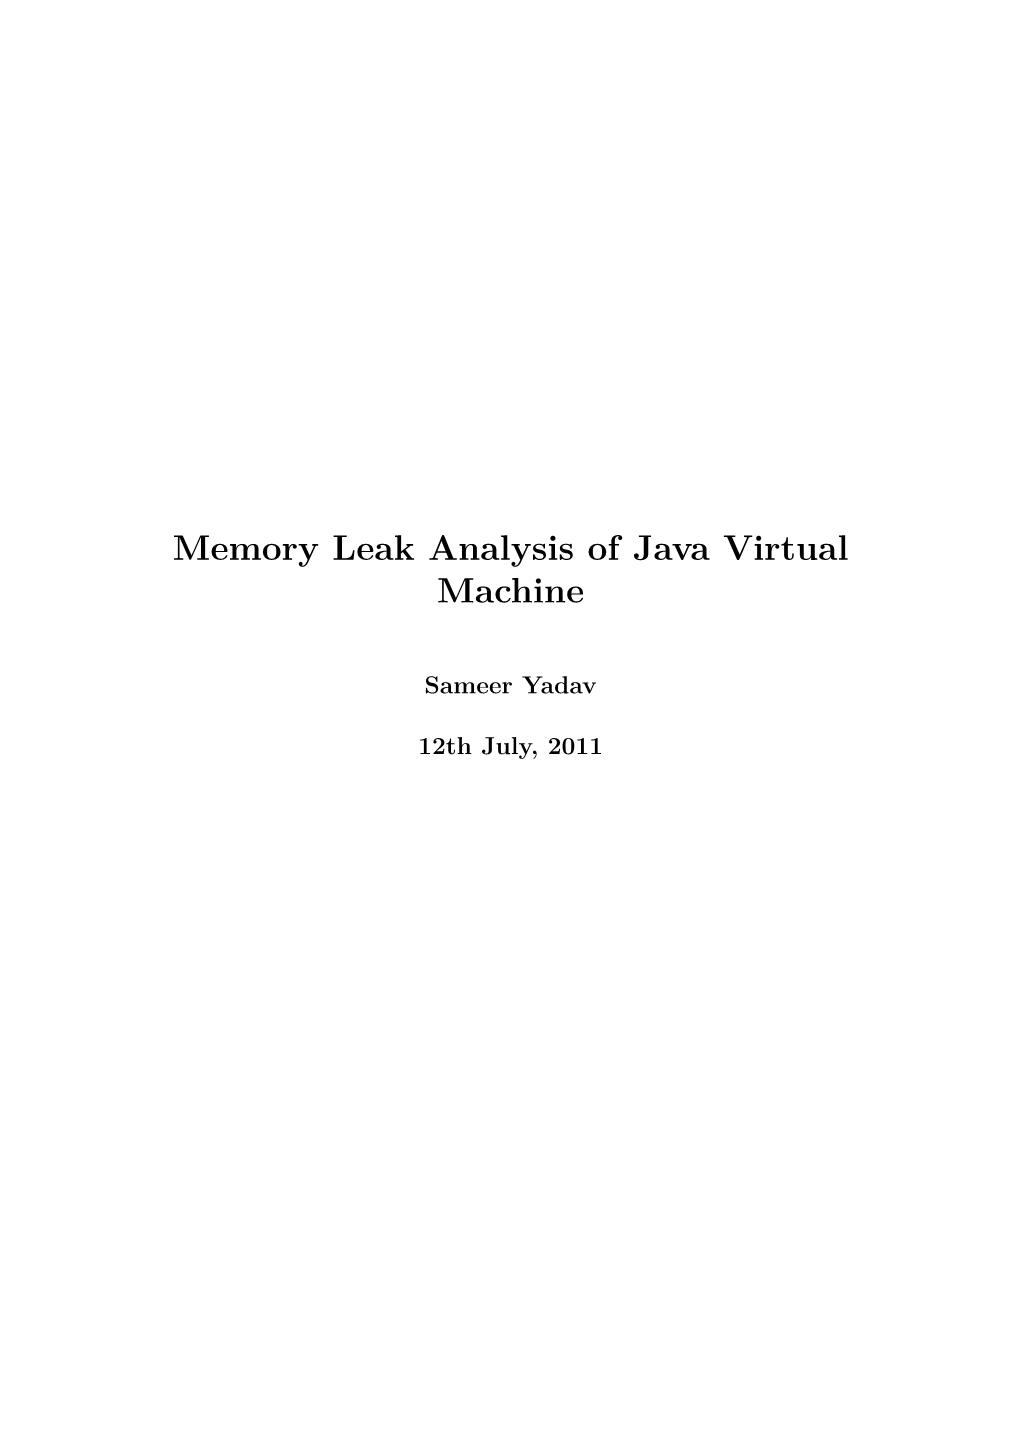 Memory Leak Analysis of Java Virtual Machine